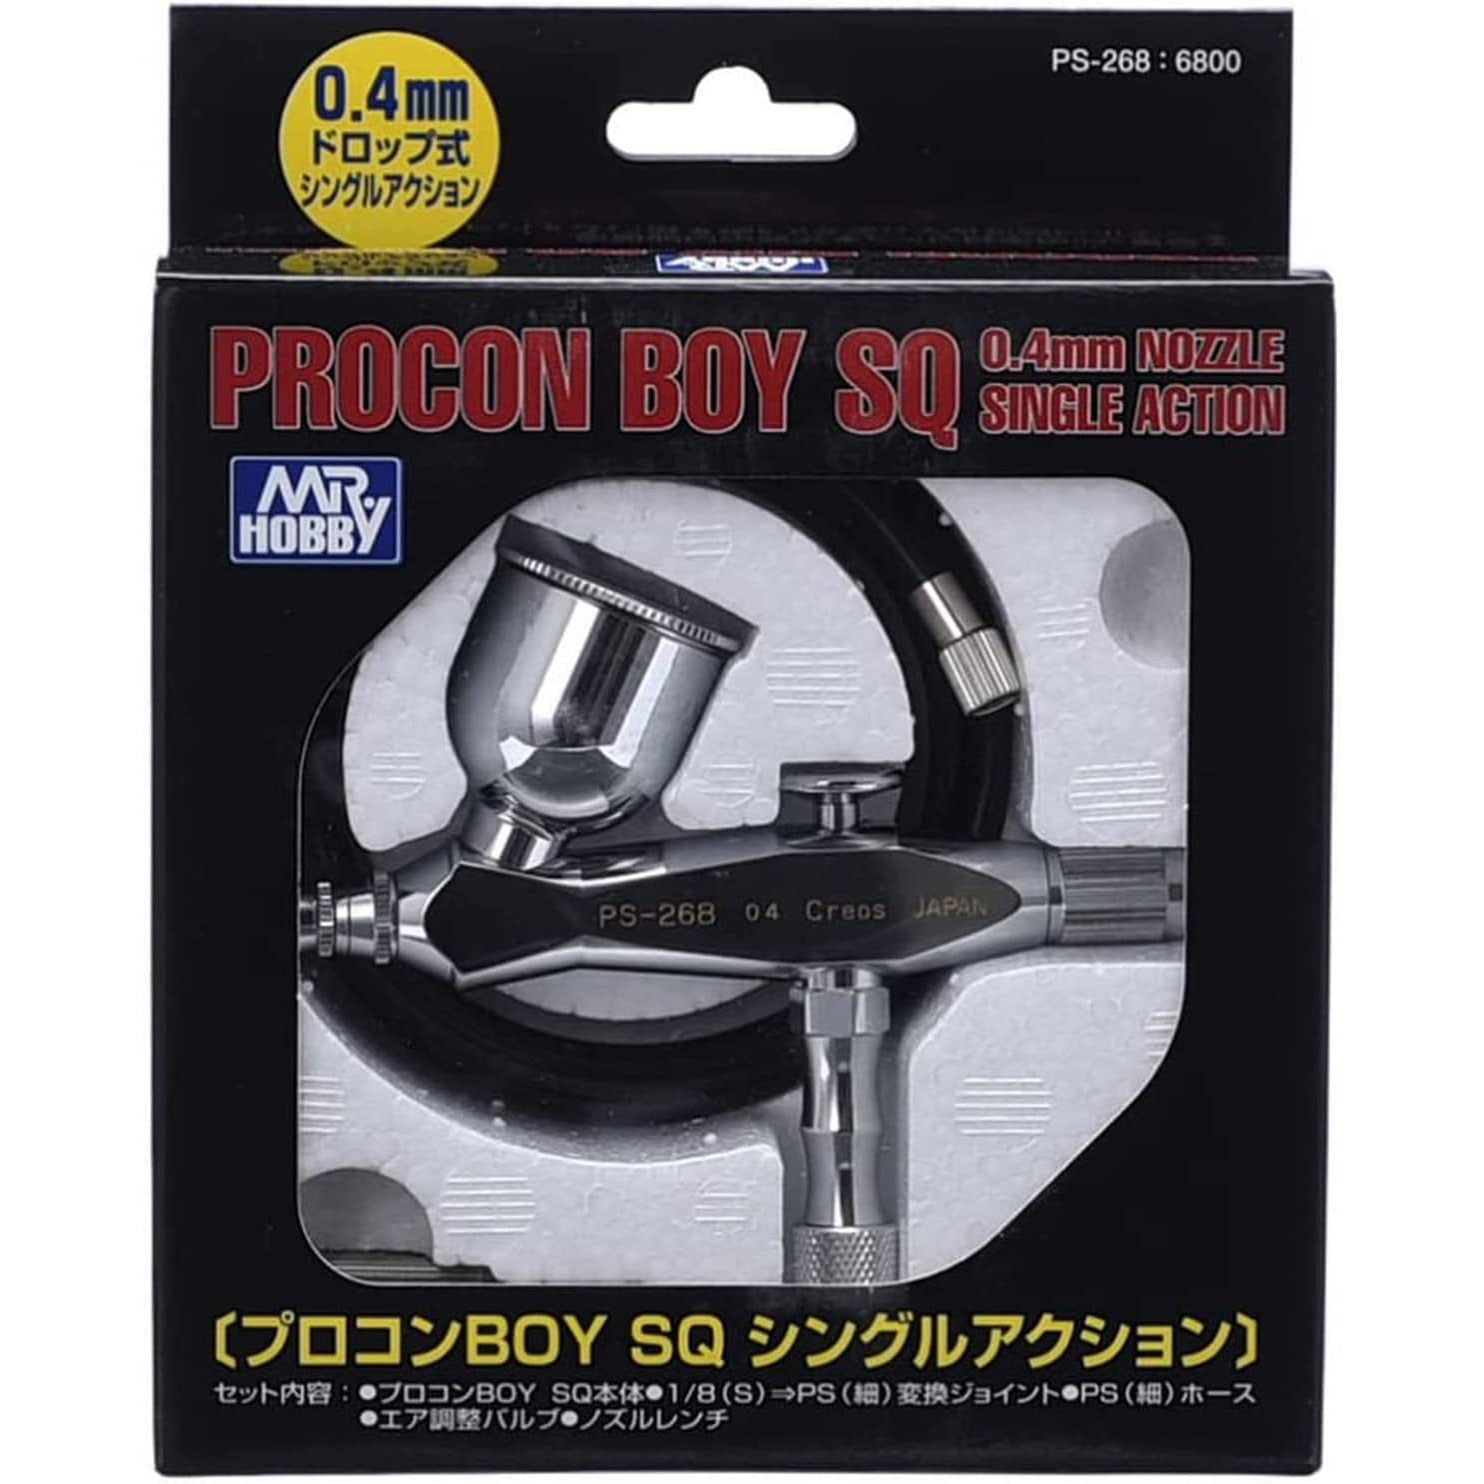 Mr. Procon Boy - SQ Single Action Airbrush by Mr. Hobby